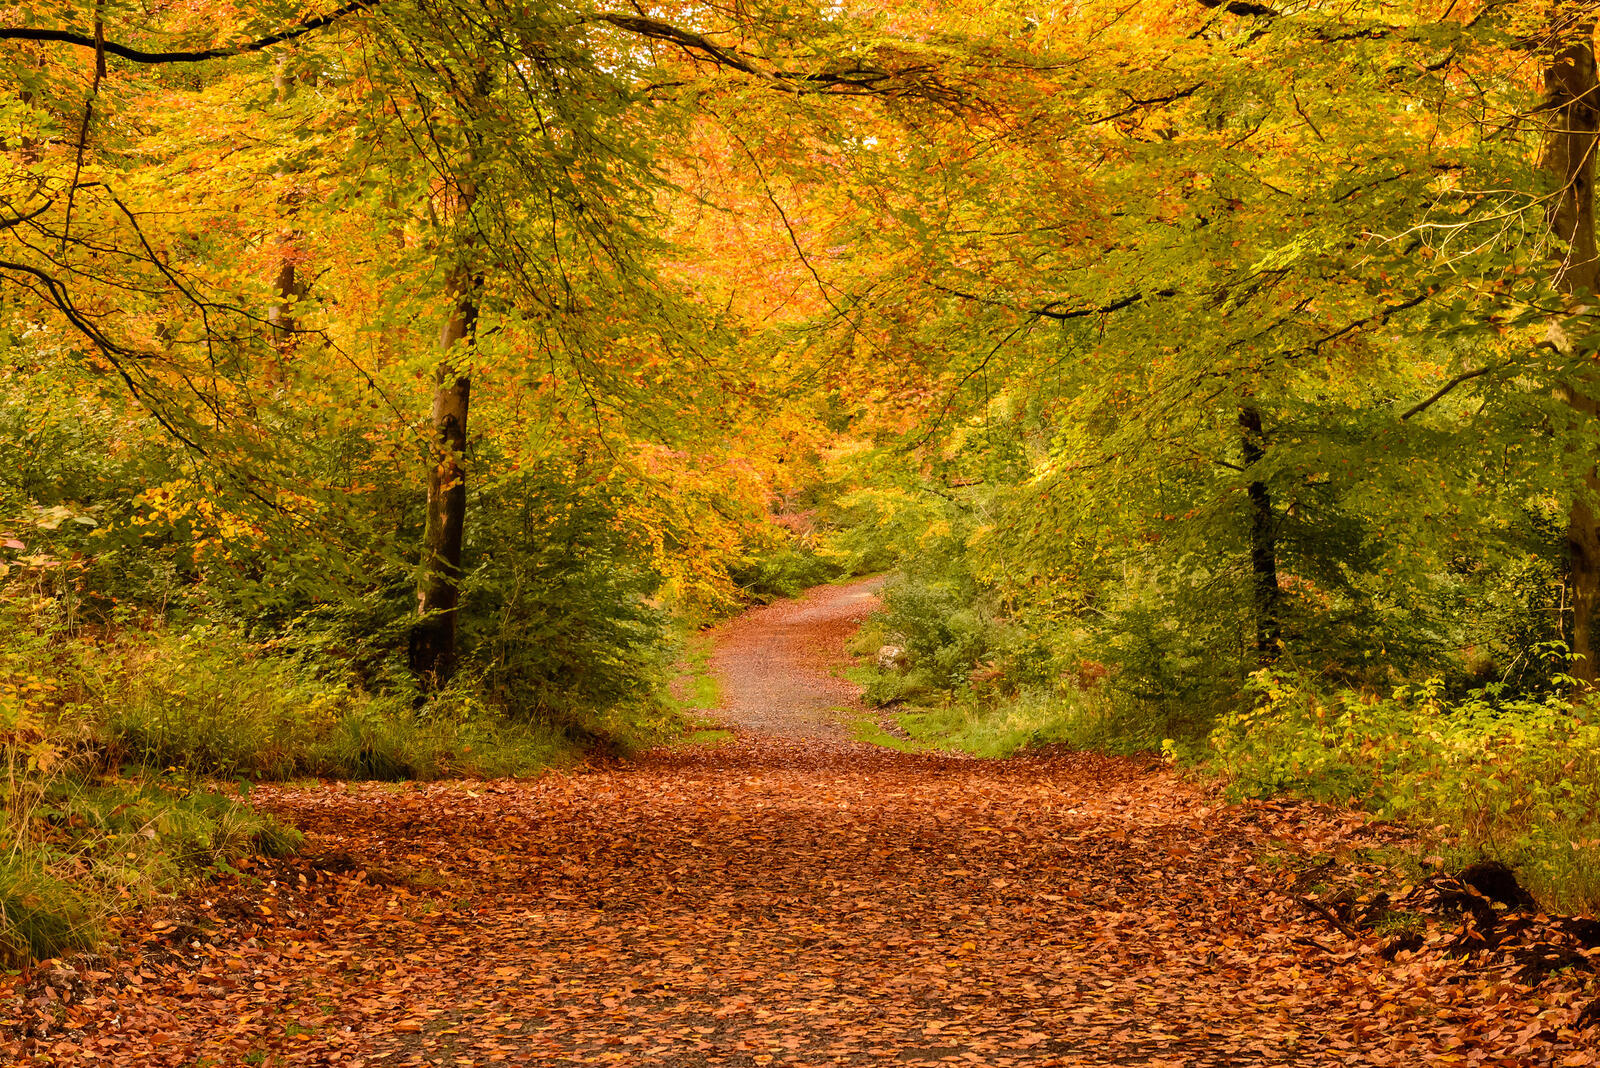 Wallpapers paints of autumn autumn leaves nature on the desktop